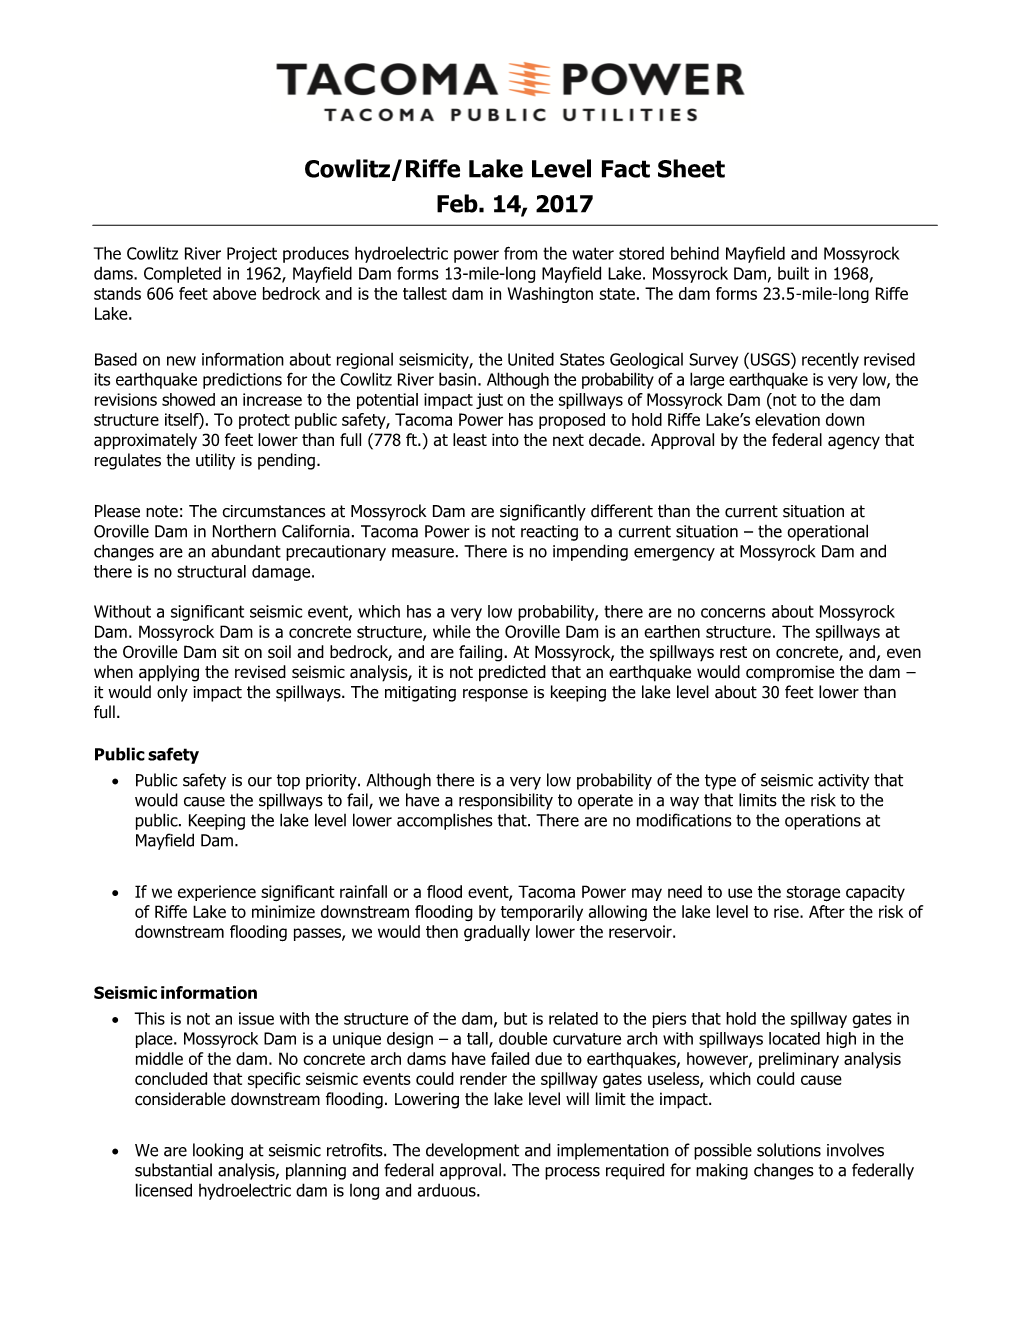 Cowlitz/Riffe Lake Level Fact Sheet Feb. 14, 2017